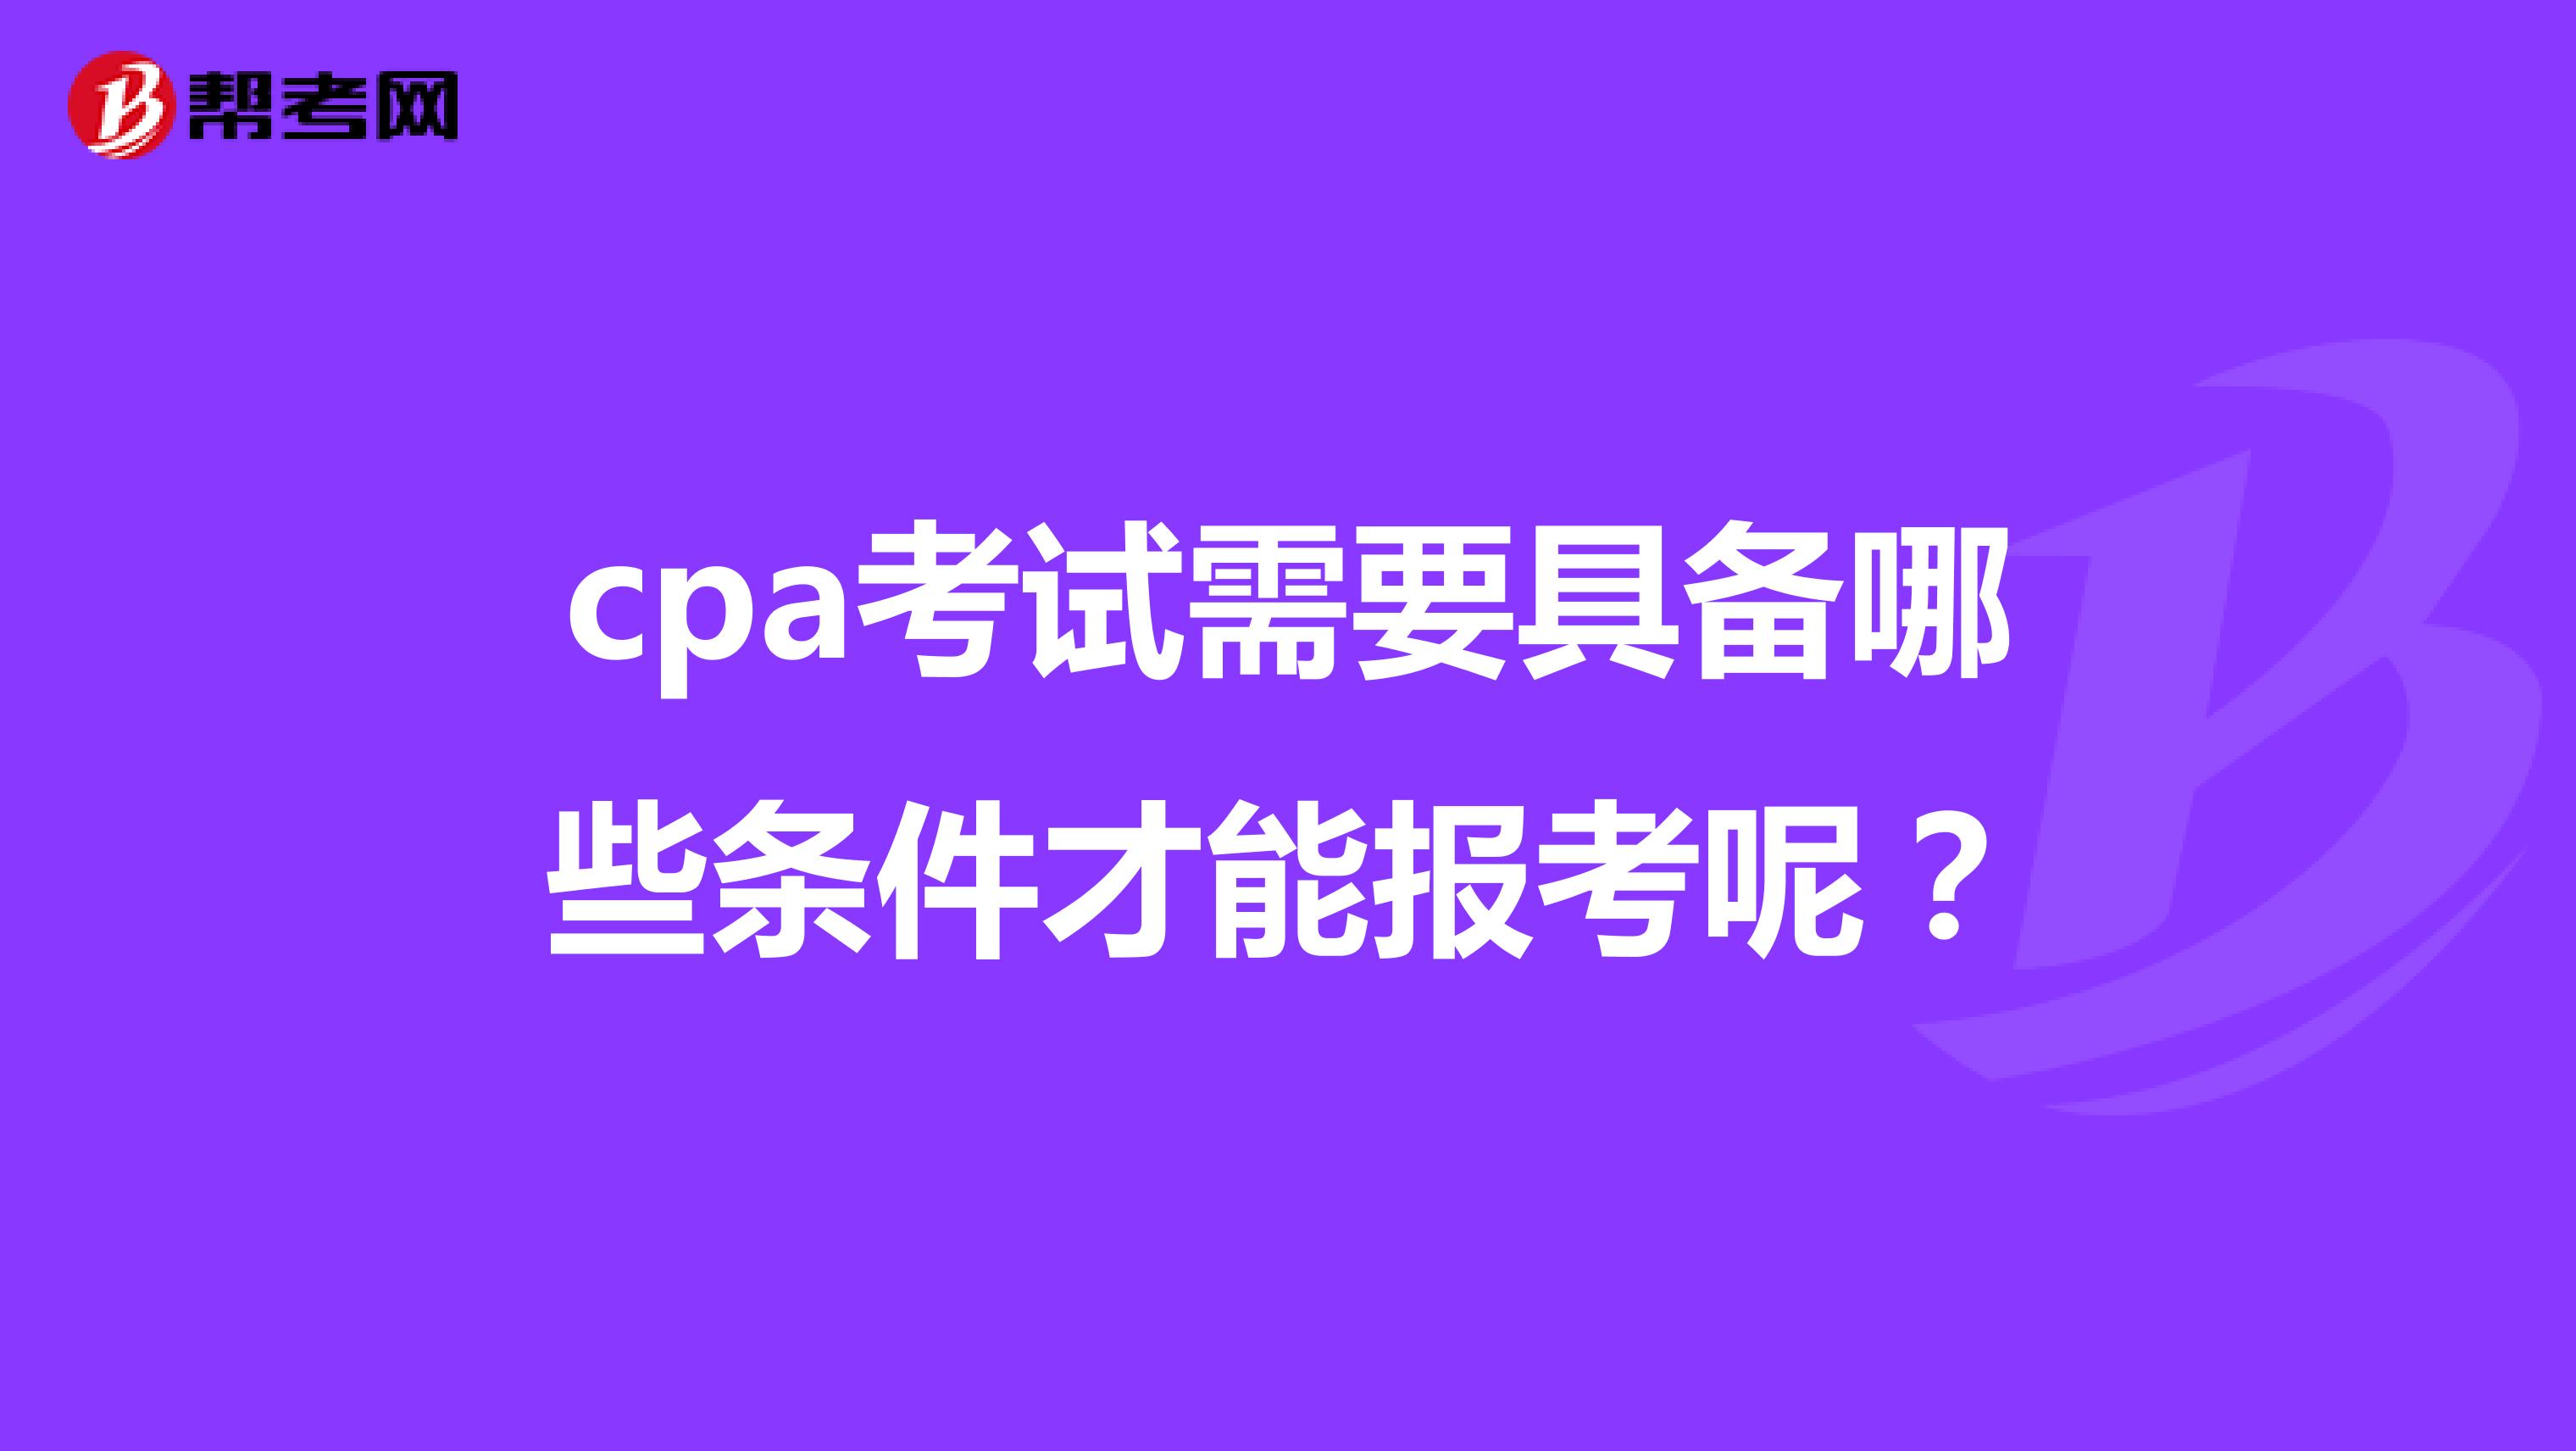 cpa考试需要具备哪些条件才能报考呢？